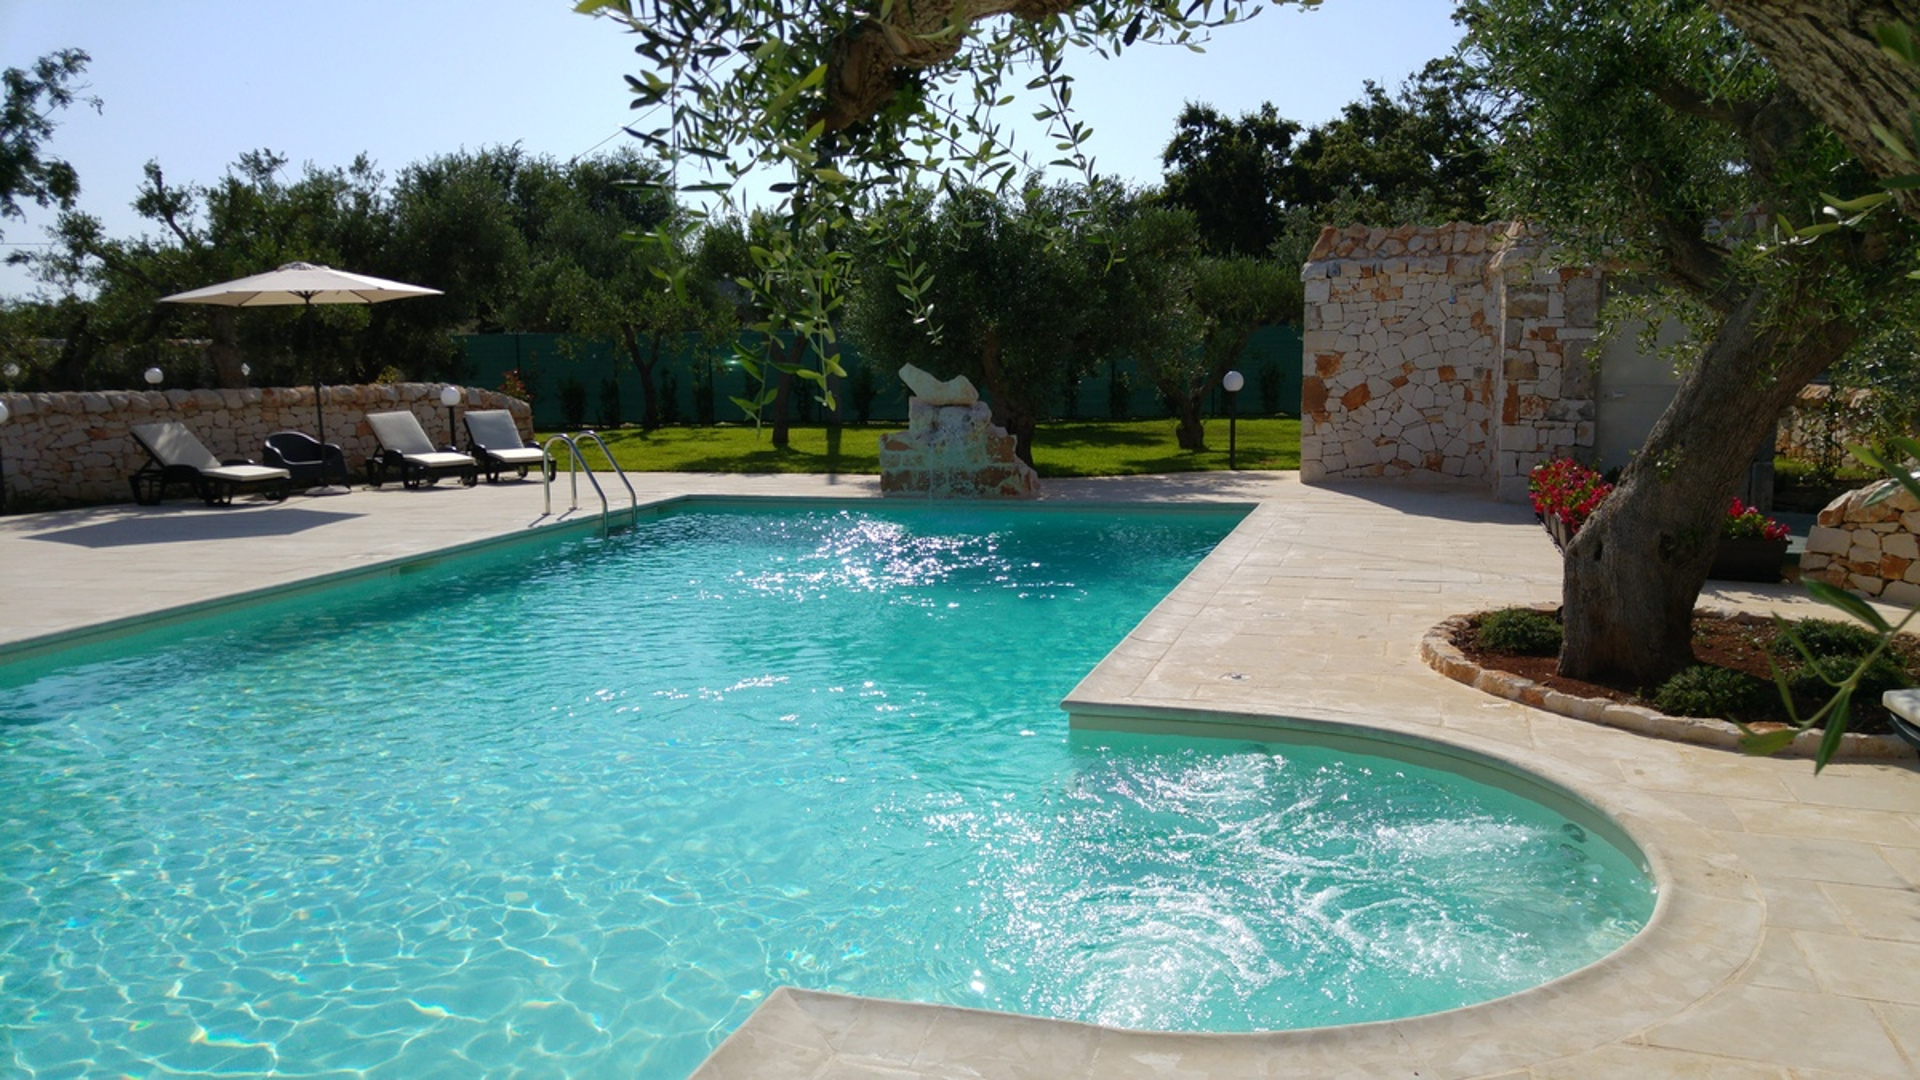 The pool of Almapetra Trulli Resort